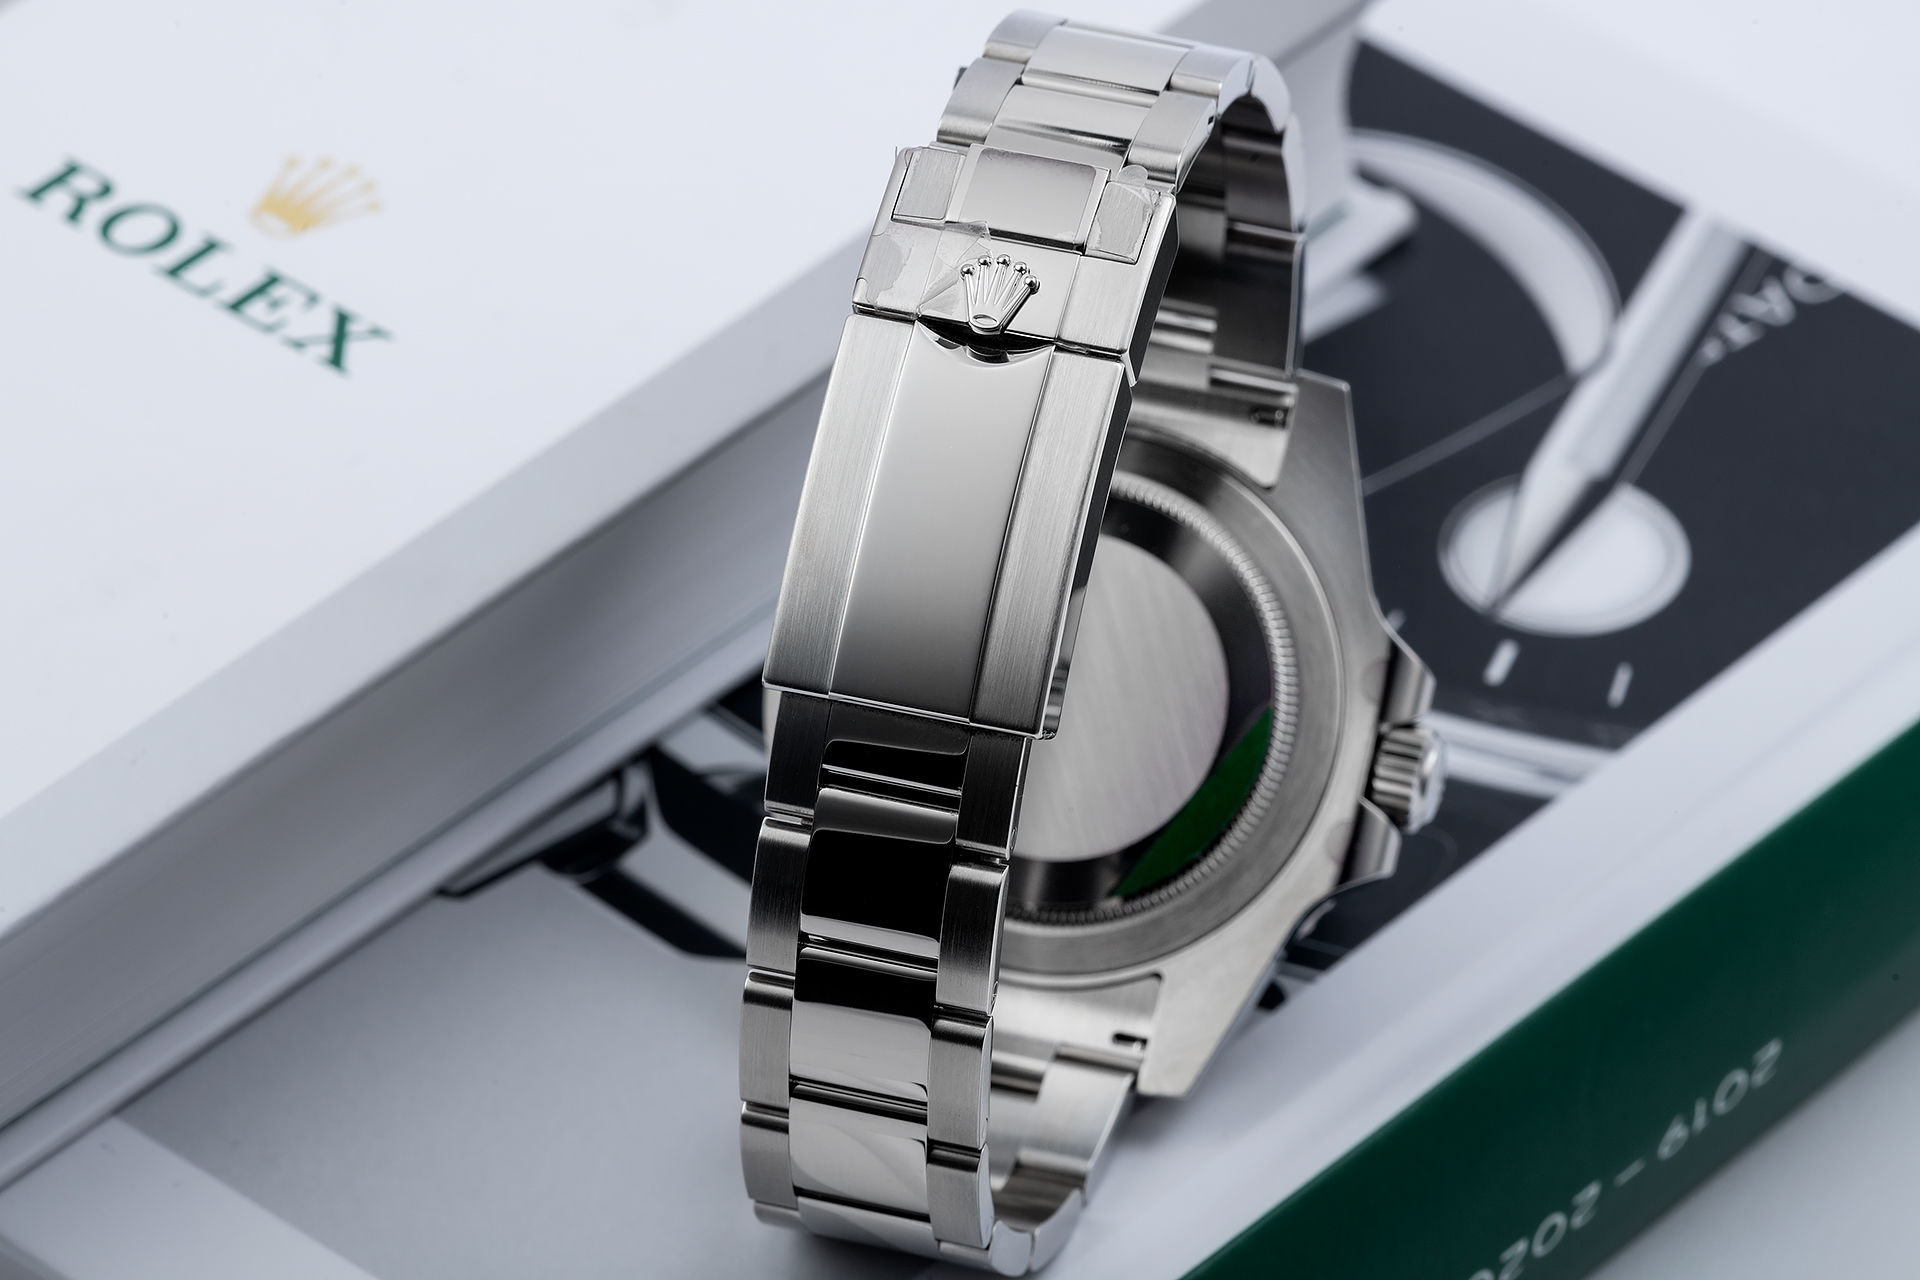 ref 116710LN | 5 Year Warranty 'Totally Complete' | Rolex GMT-Master II